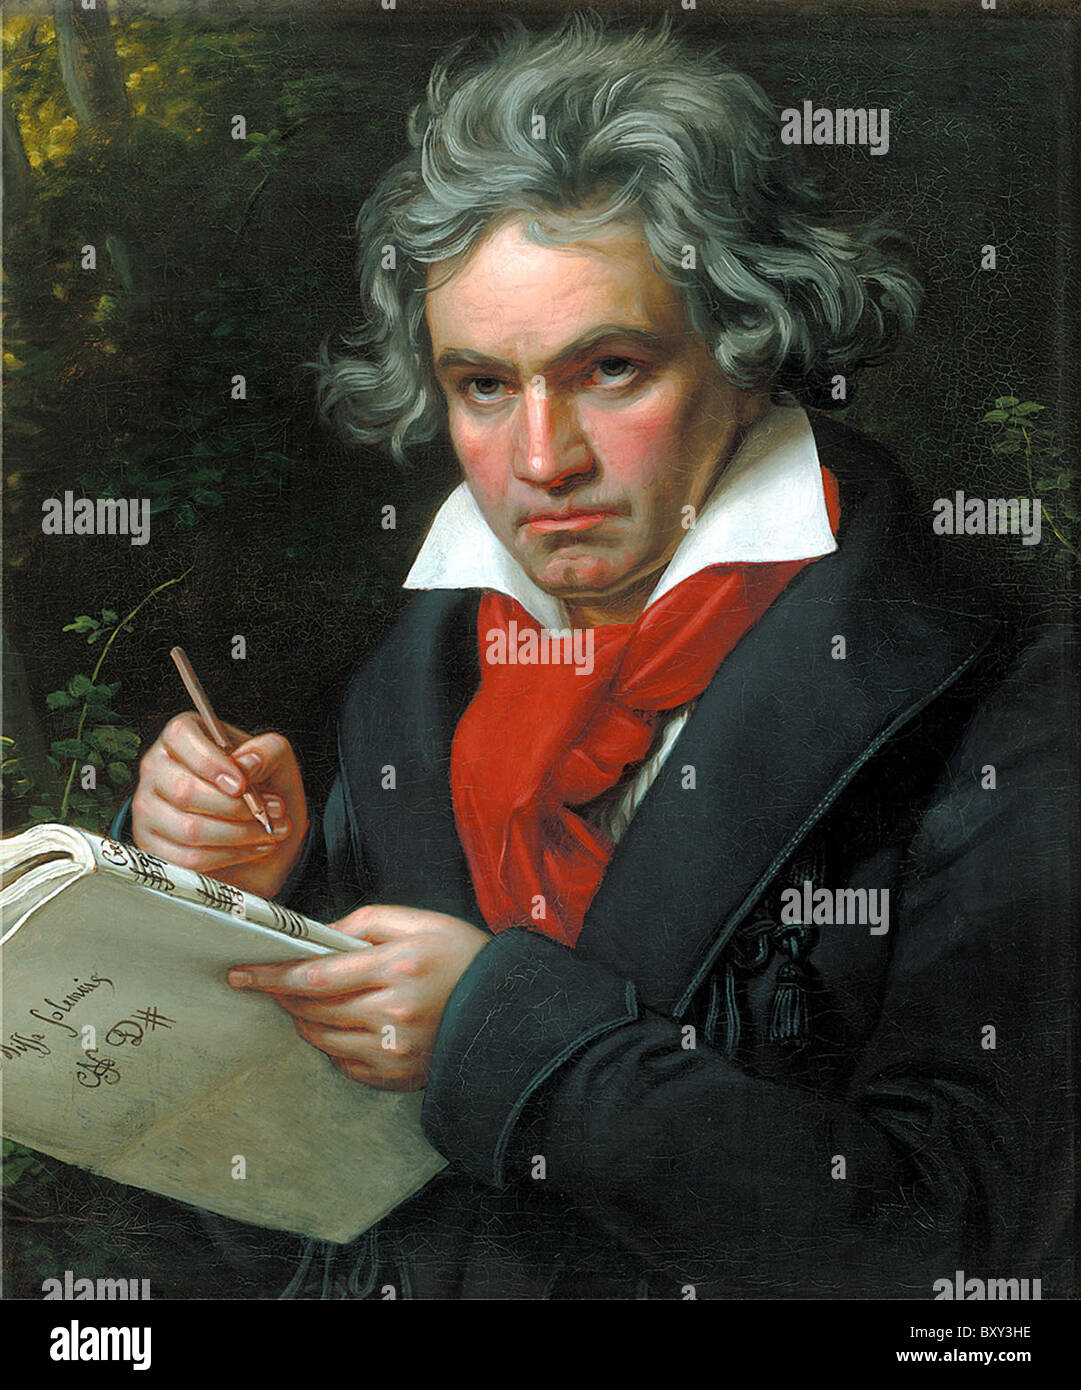 Beethoven, Ludwig van Beethoven, compositeur et pianiste allemand. Banque D'Images